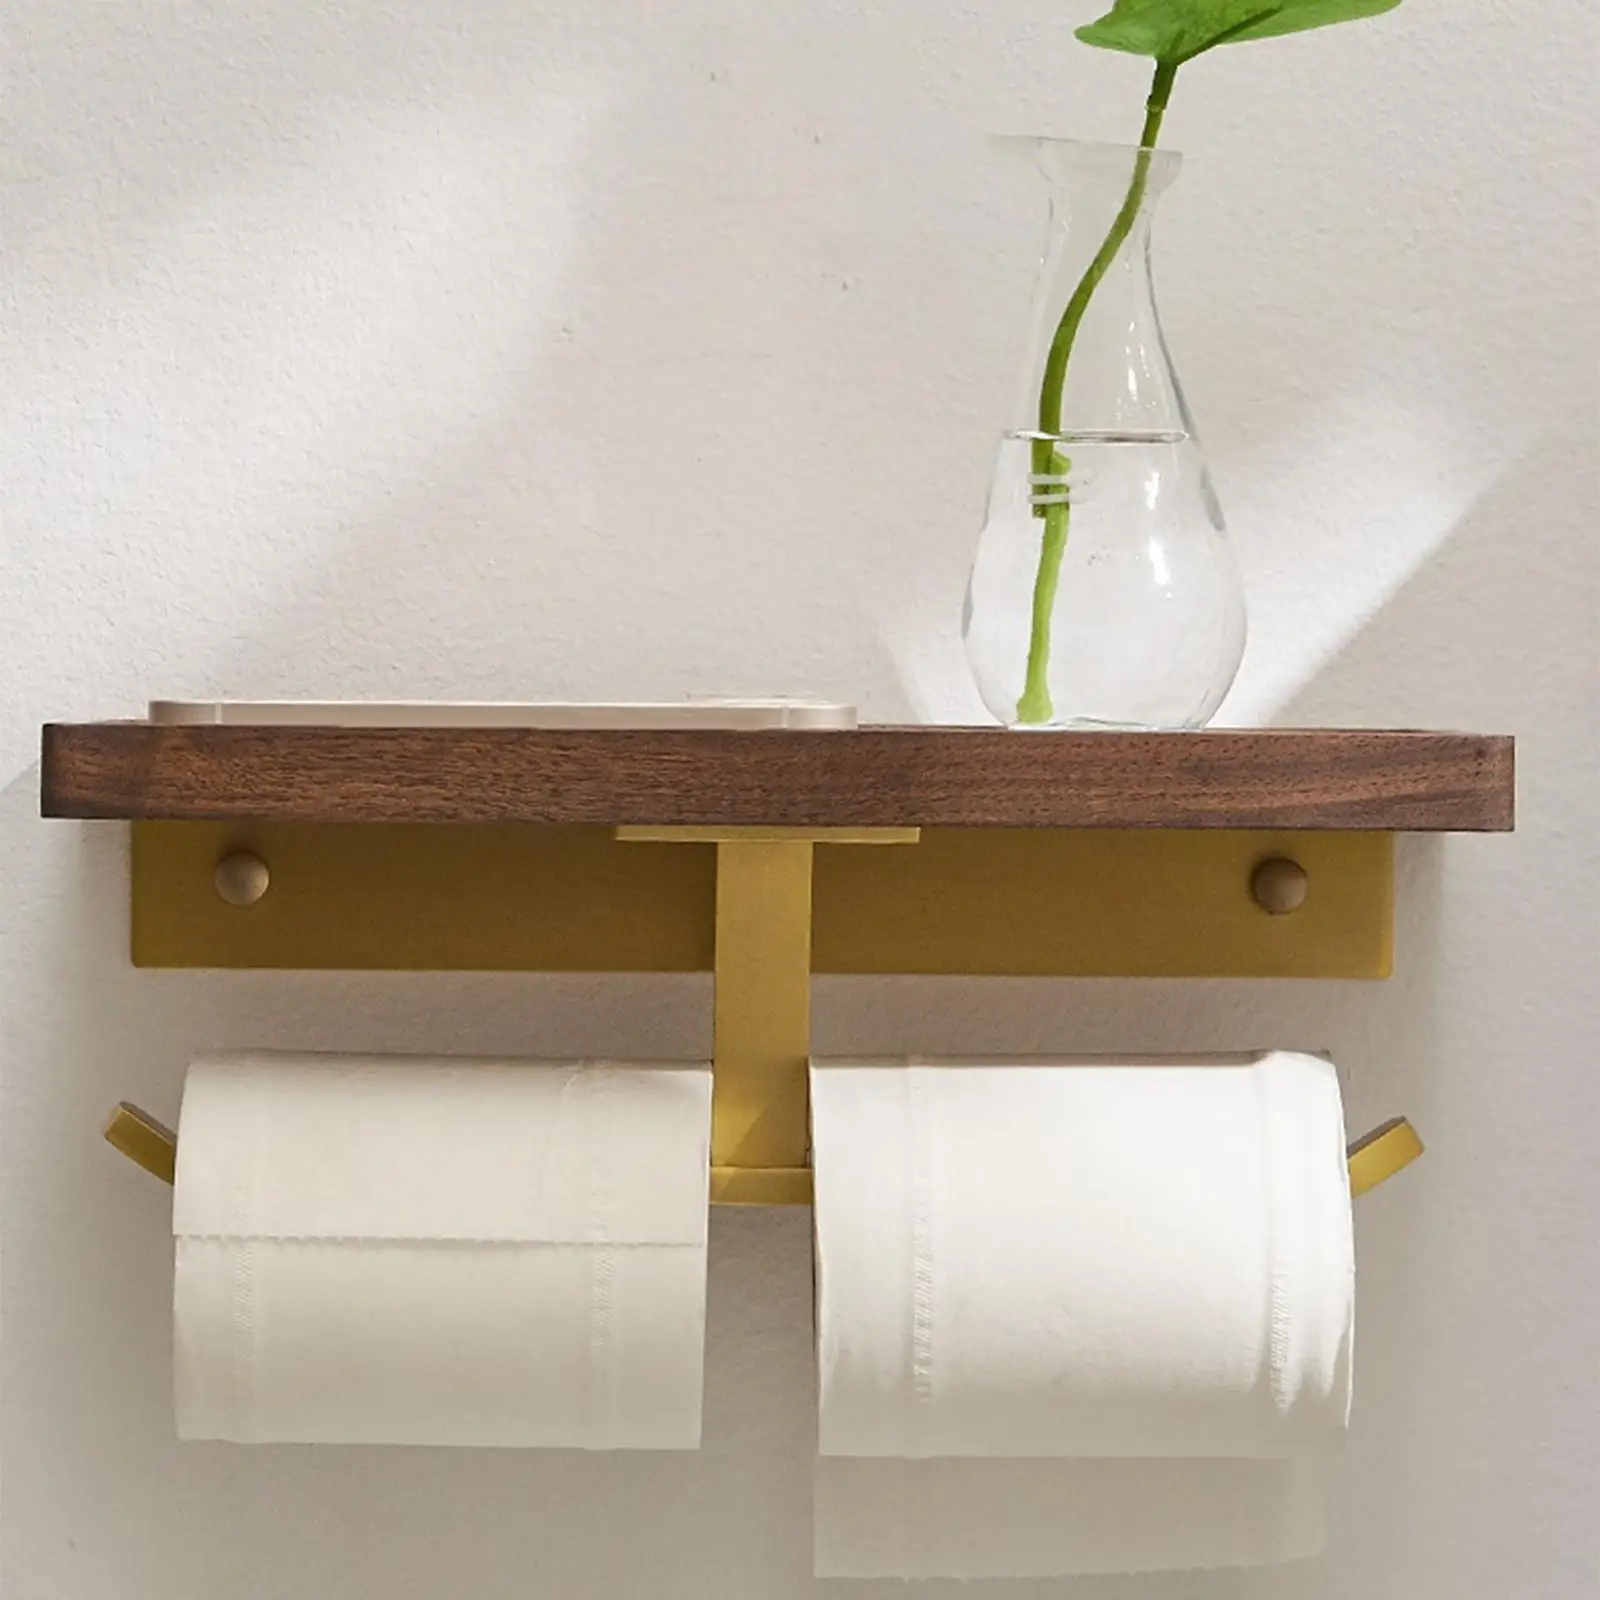 Walnut Wood Toilet Paper Holder with Shelf,Phone Holder,Stainless Steel Toilet Paper Roll Holder